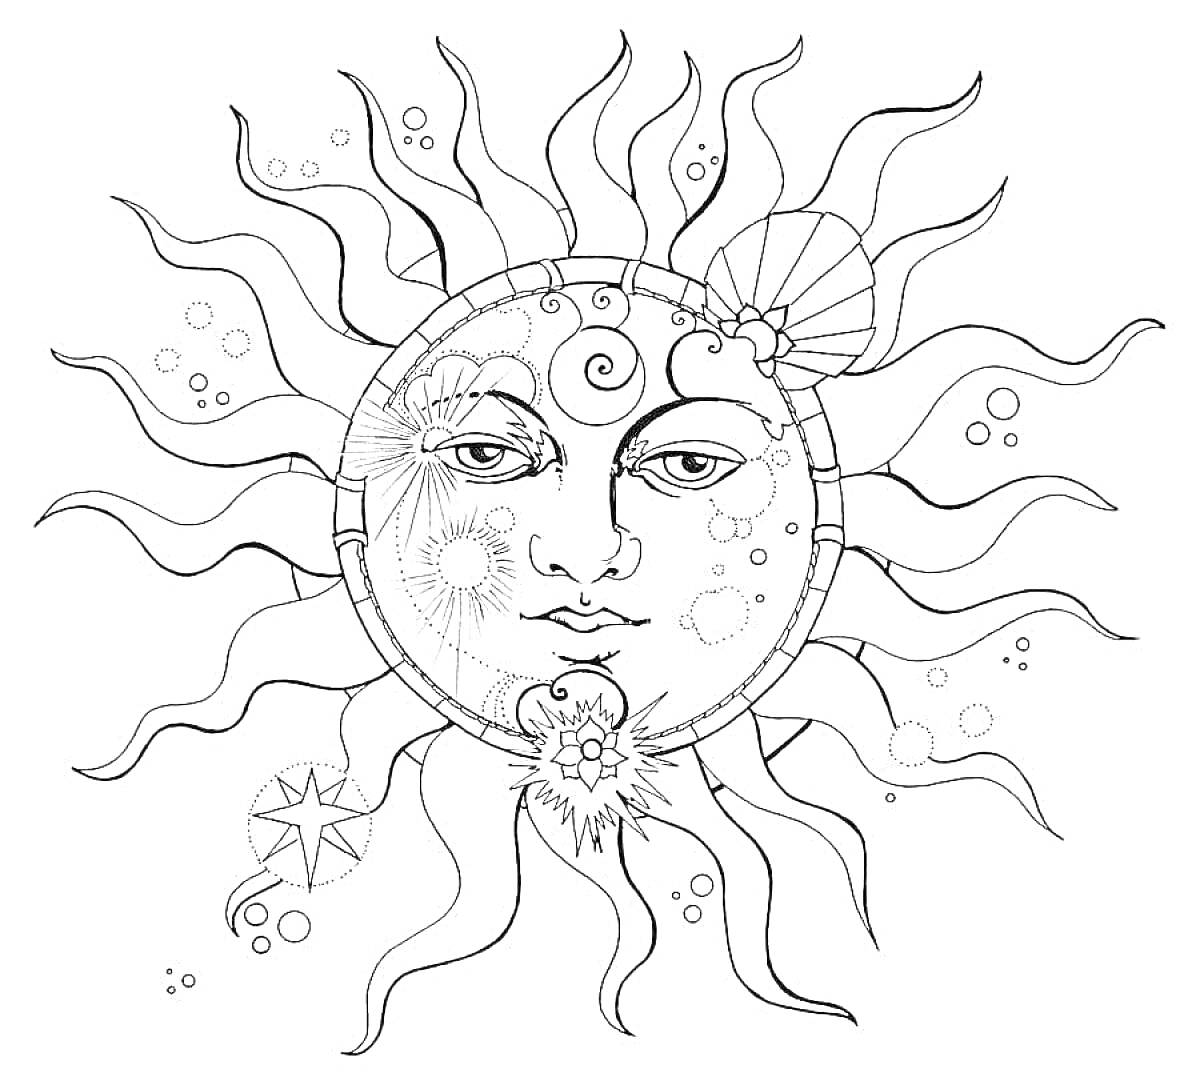 На раскраске изображено: Солнце, Луна, Лицо, Узоры, Лучи, Звезды, Цветы, Раковина, Арт